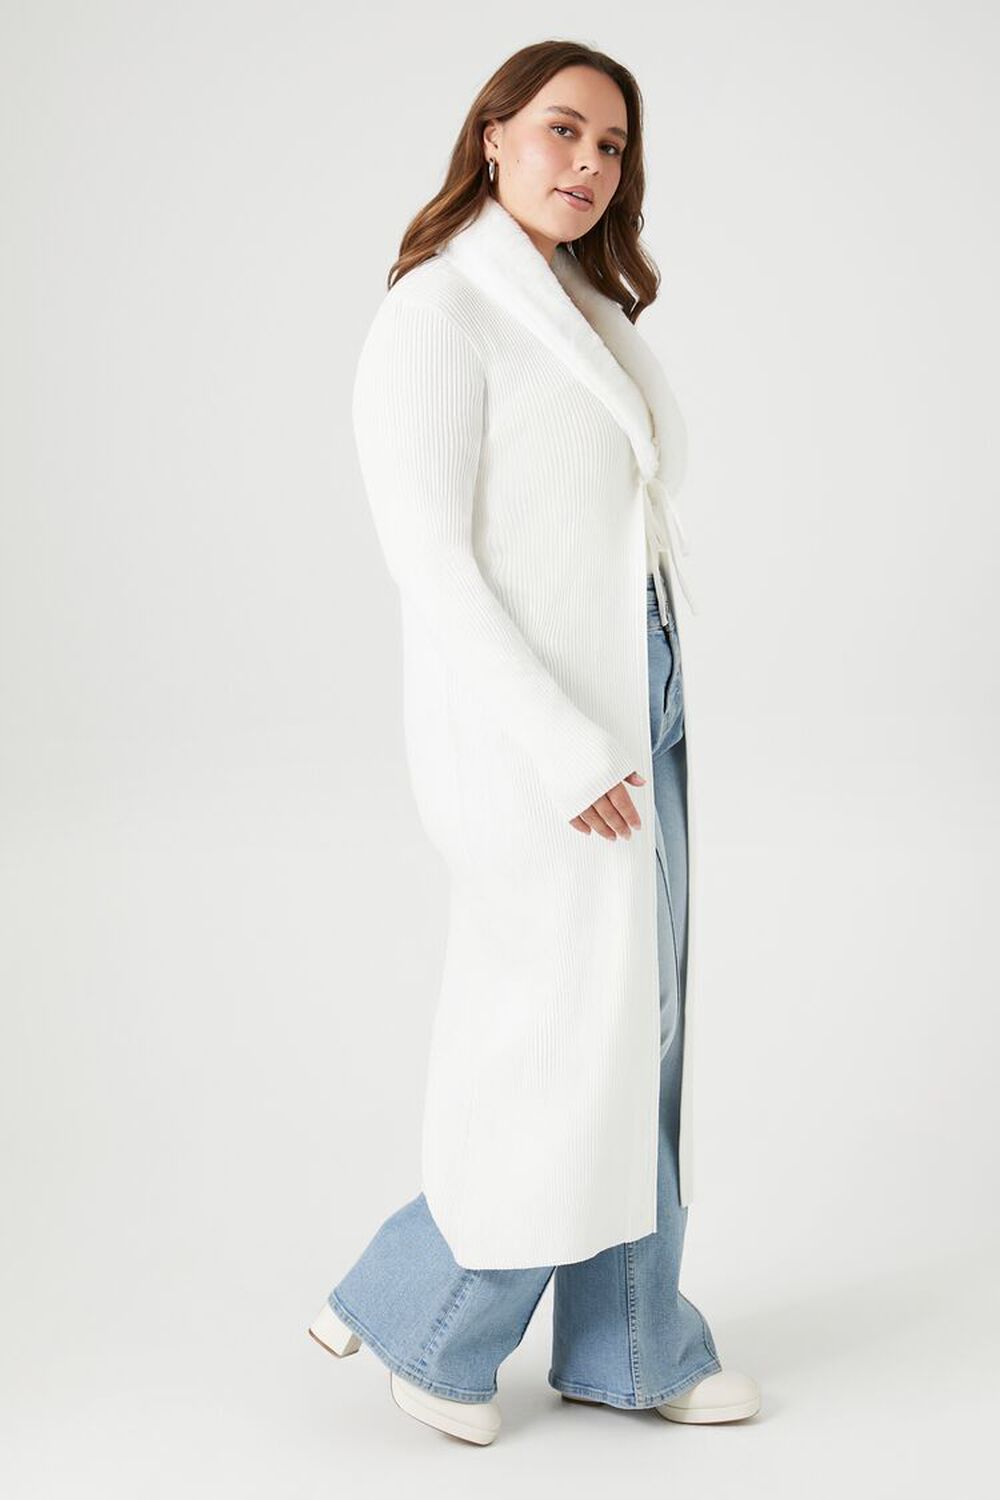 Addition Elle Plus Size Longline Cardigan Sweater Plus Size 1X